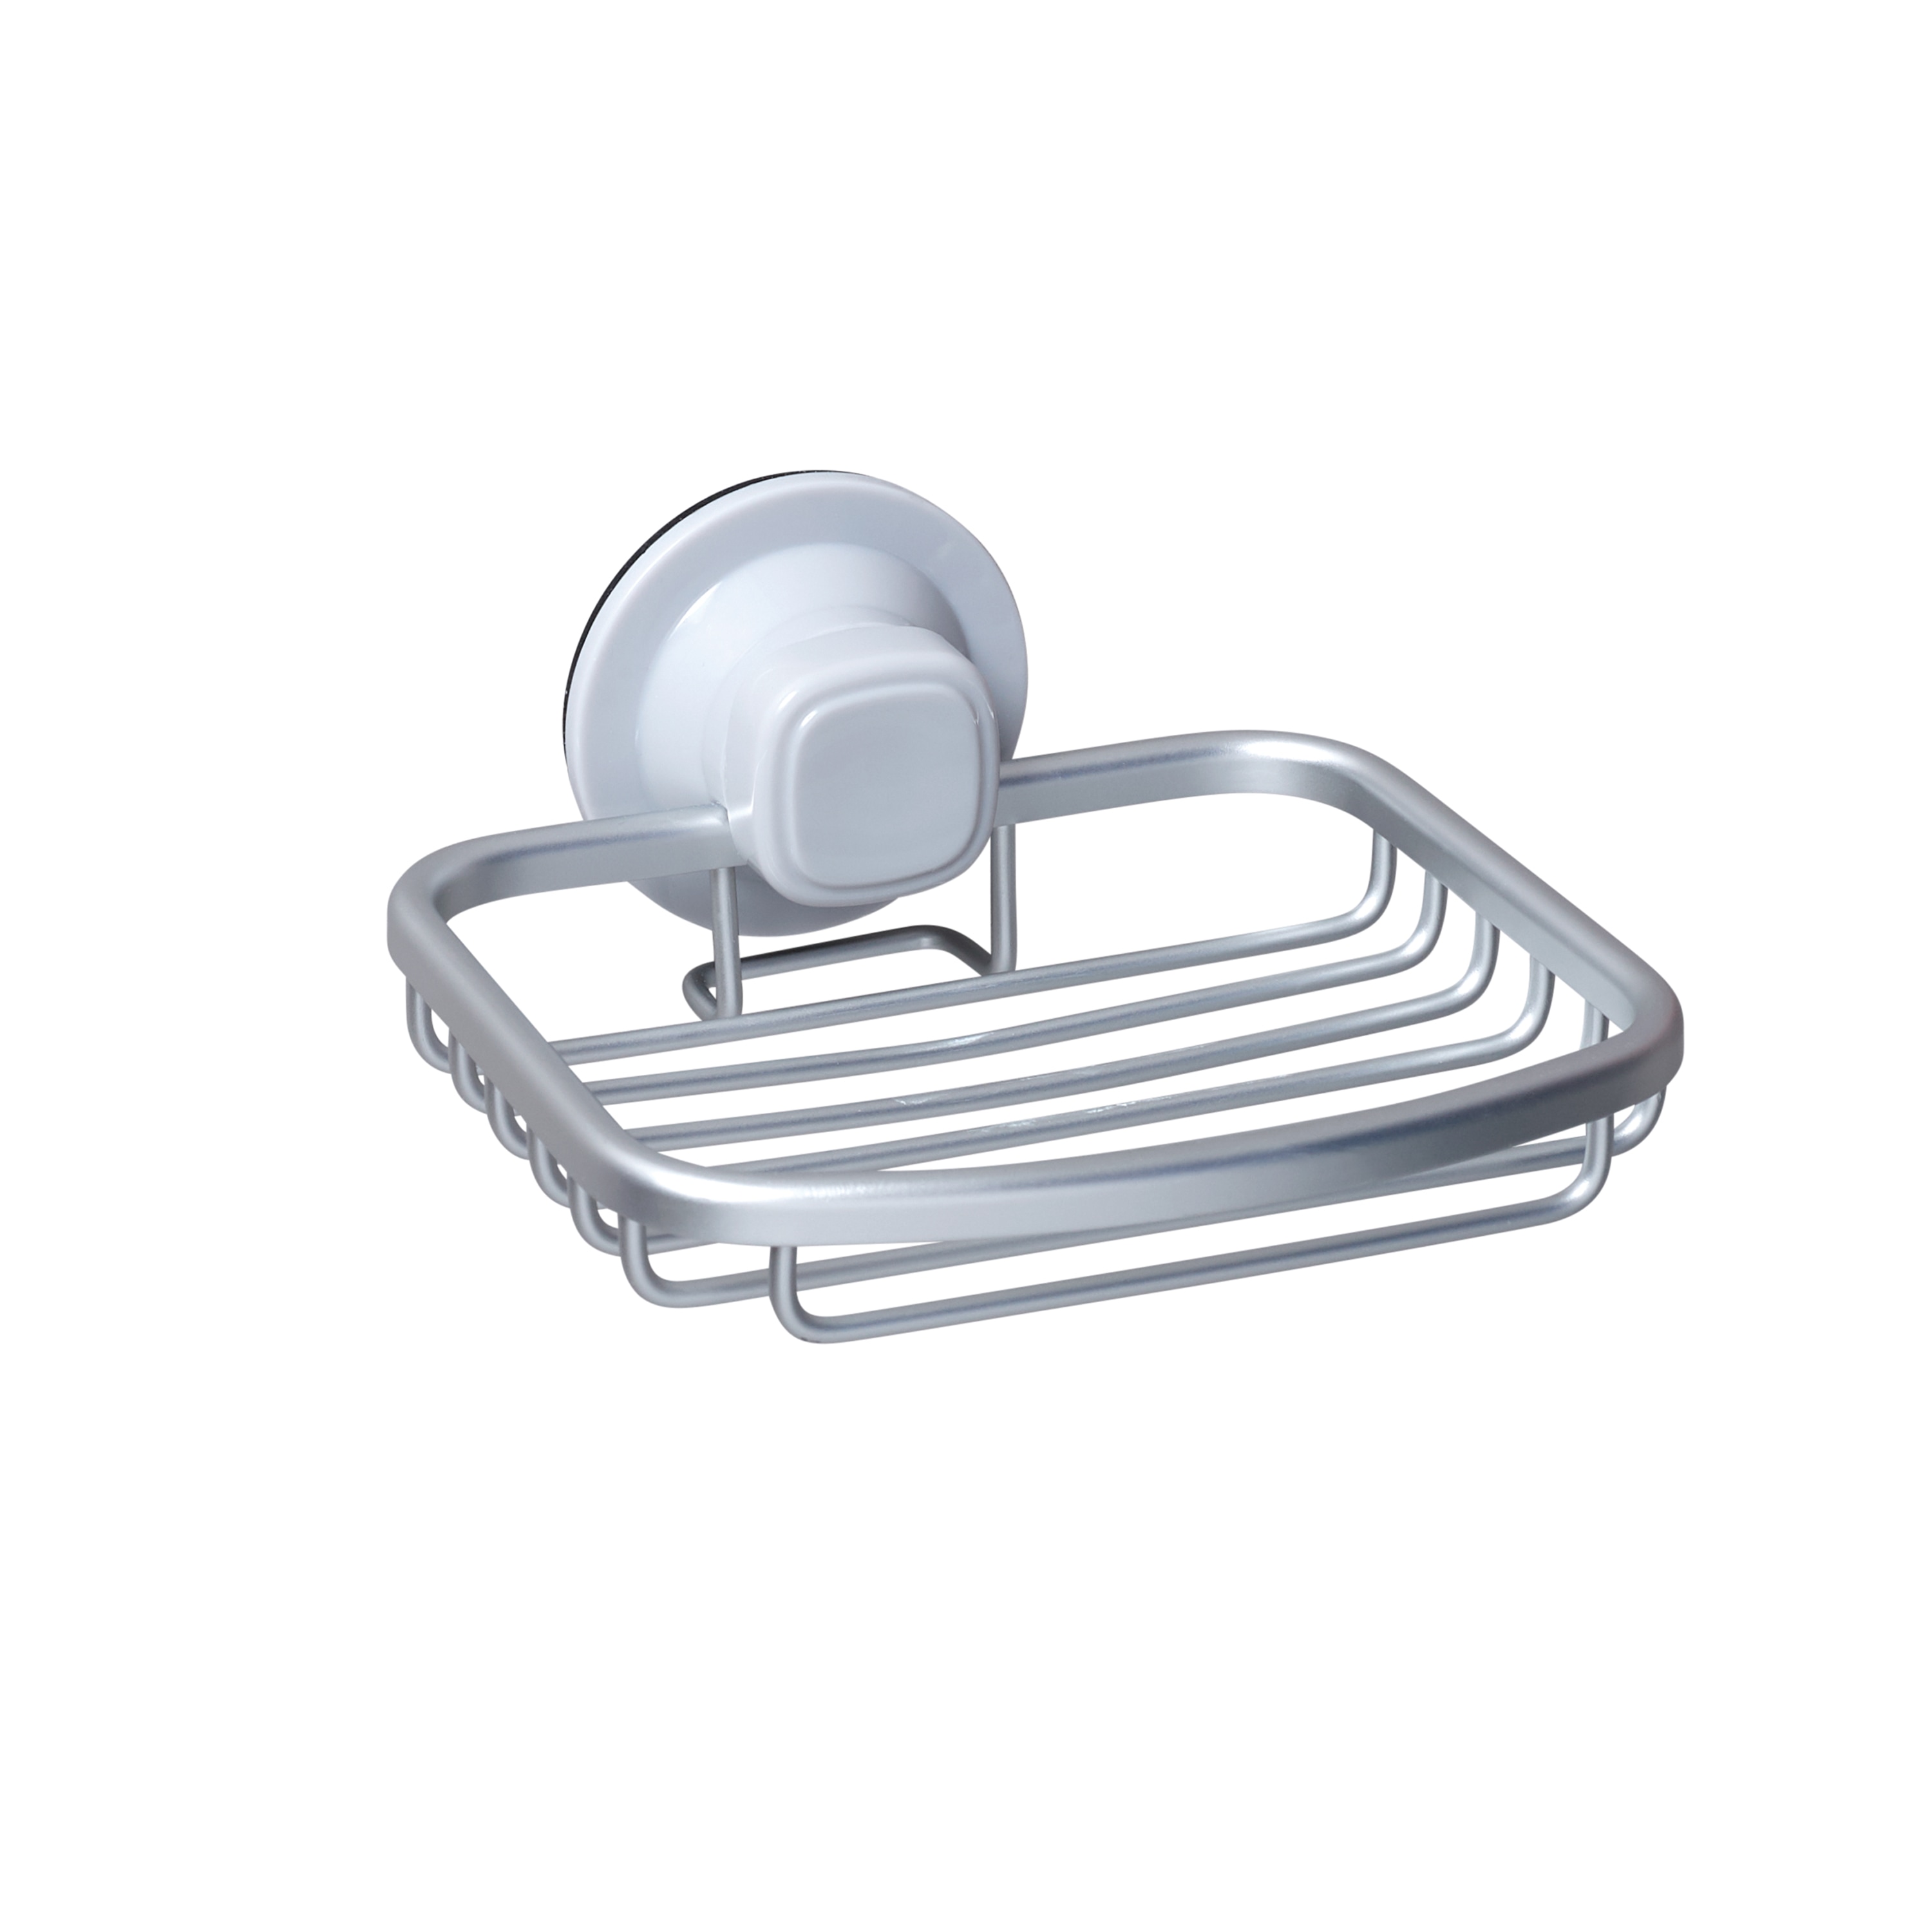 Wall Mount Soap Dish Holder Basket Tray Bathroom Bath Shower Stainless Steel-01 